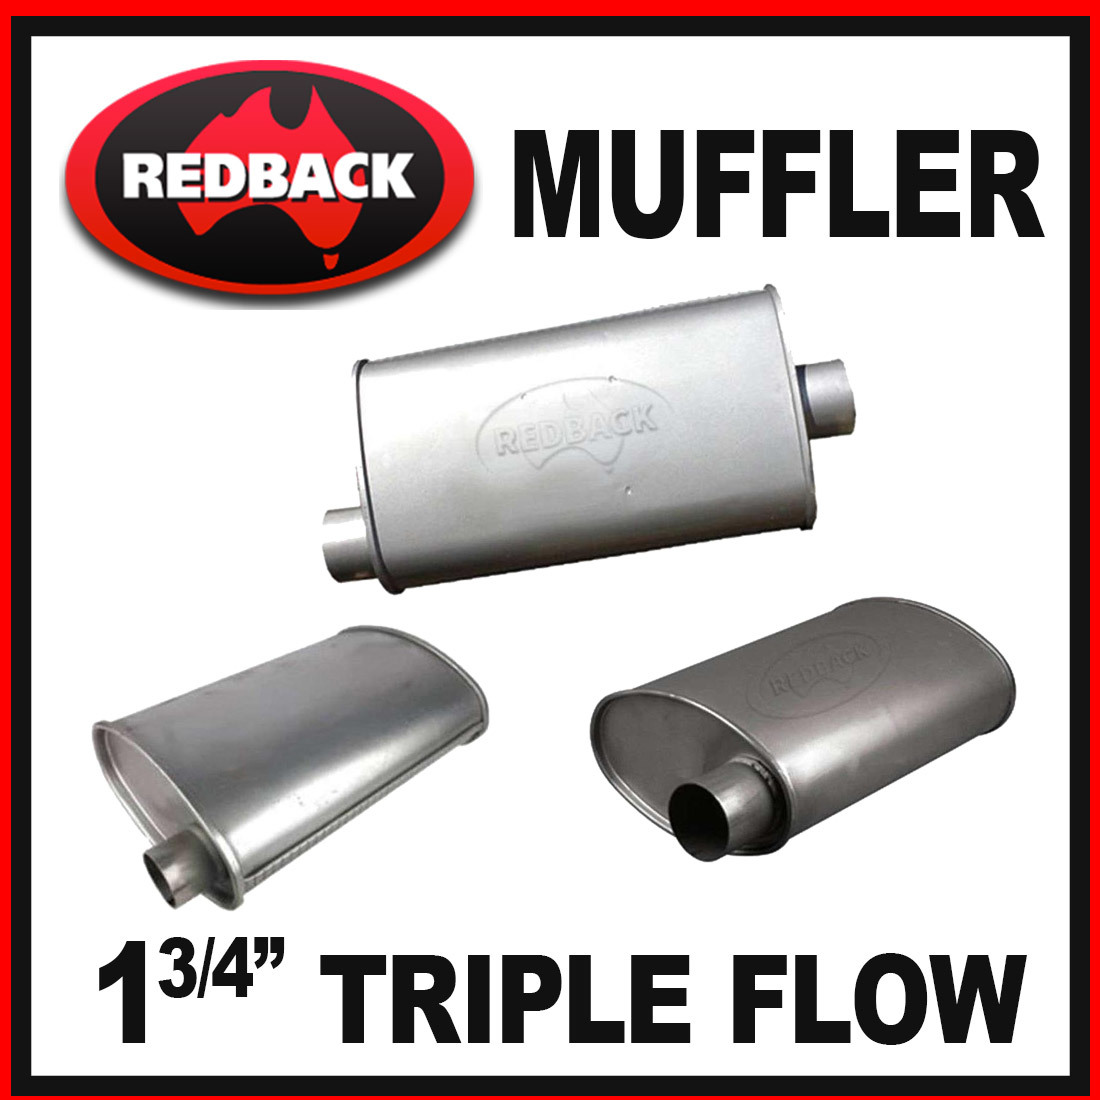 Redback 1 3/4" Triple Flow Muffler image